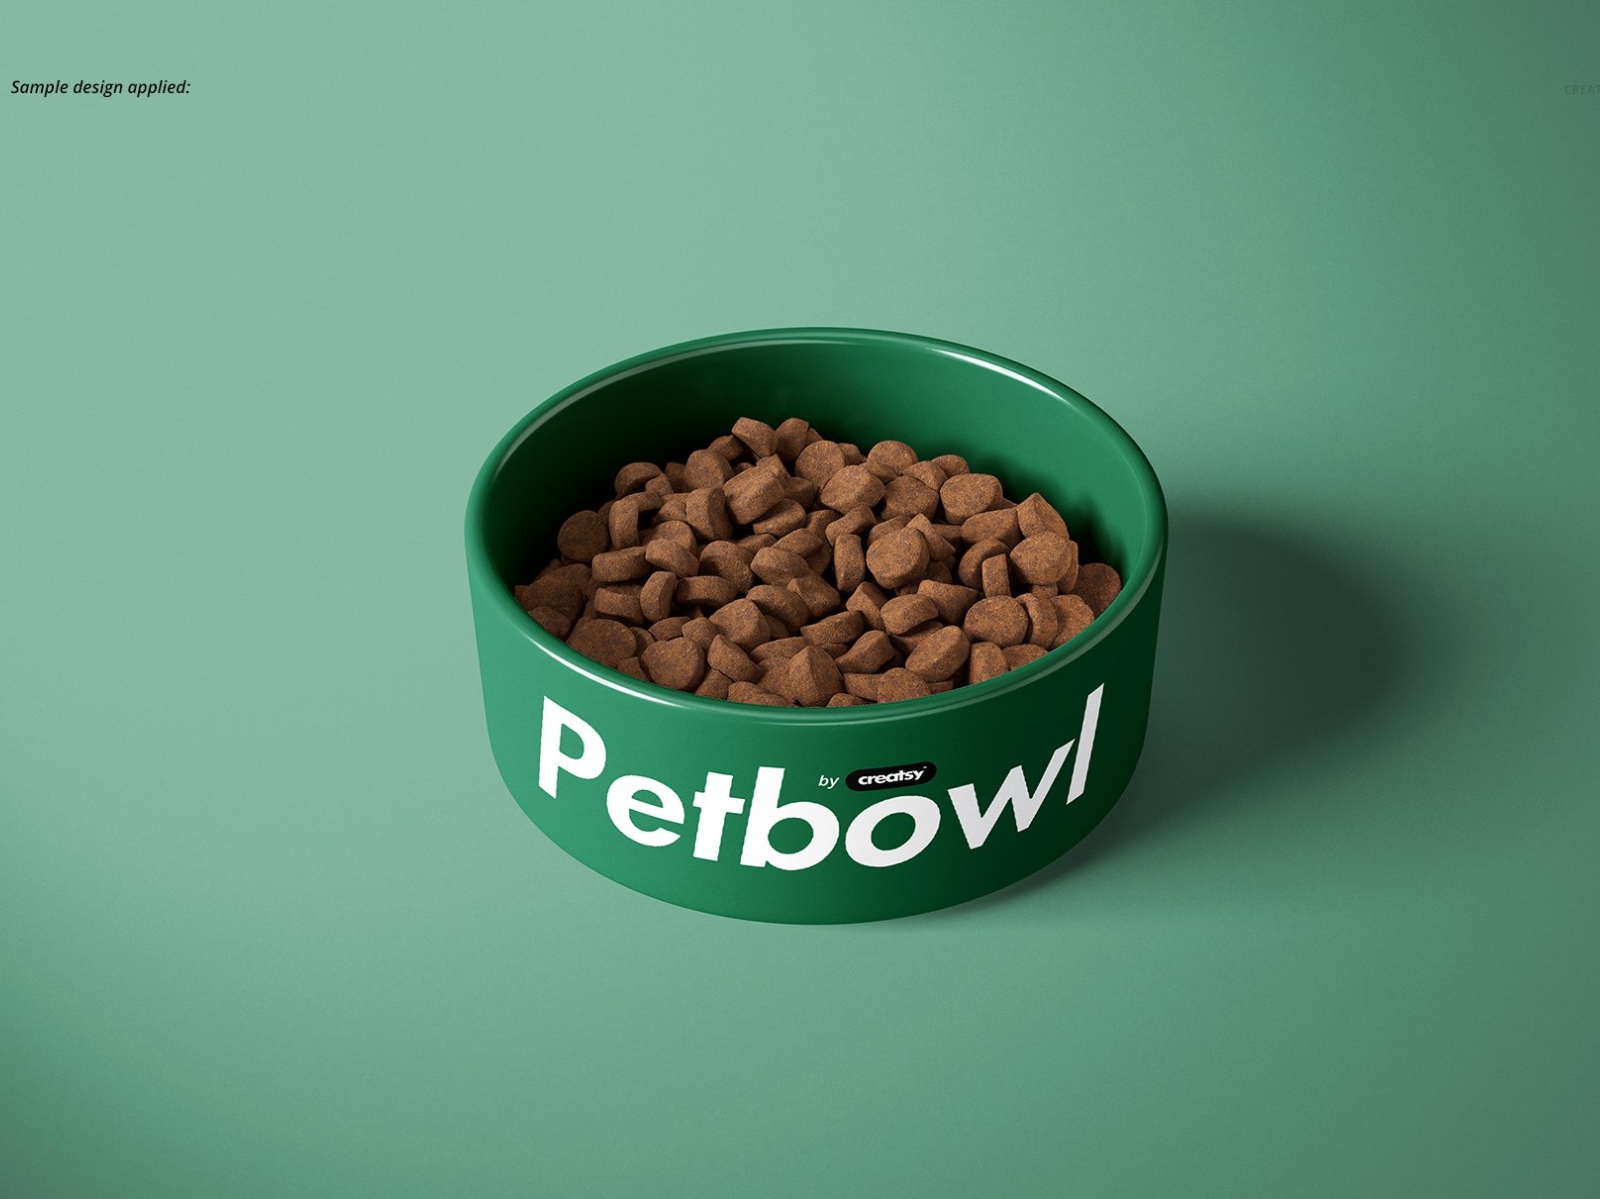 Pet Bowl Mockup Set by Mockup5 on Dribbble